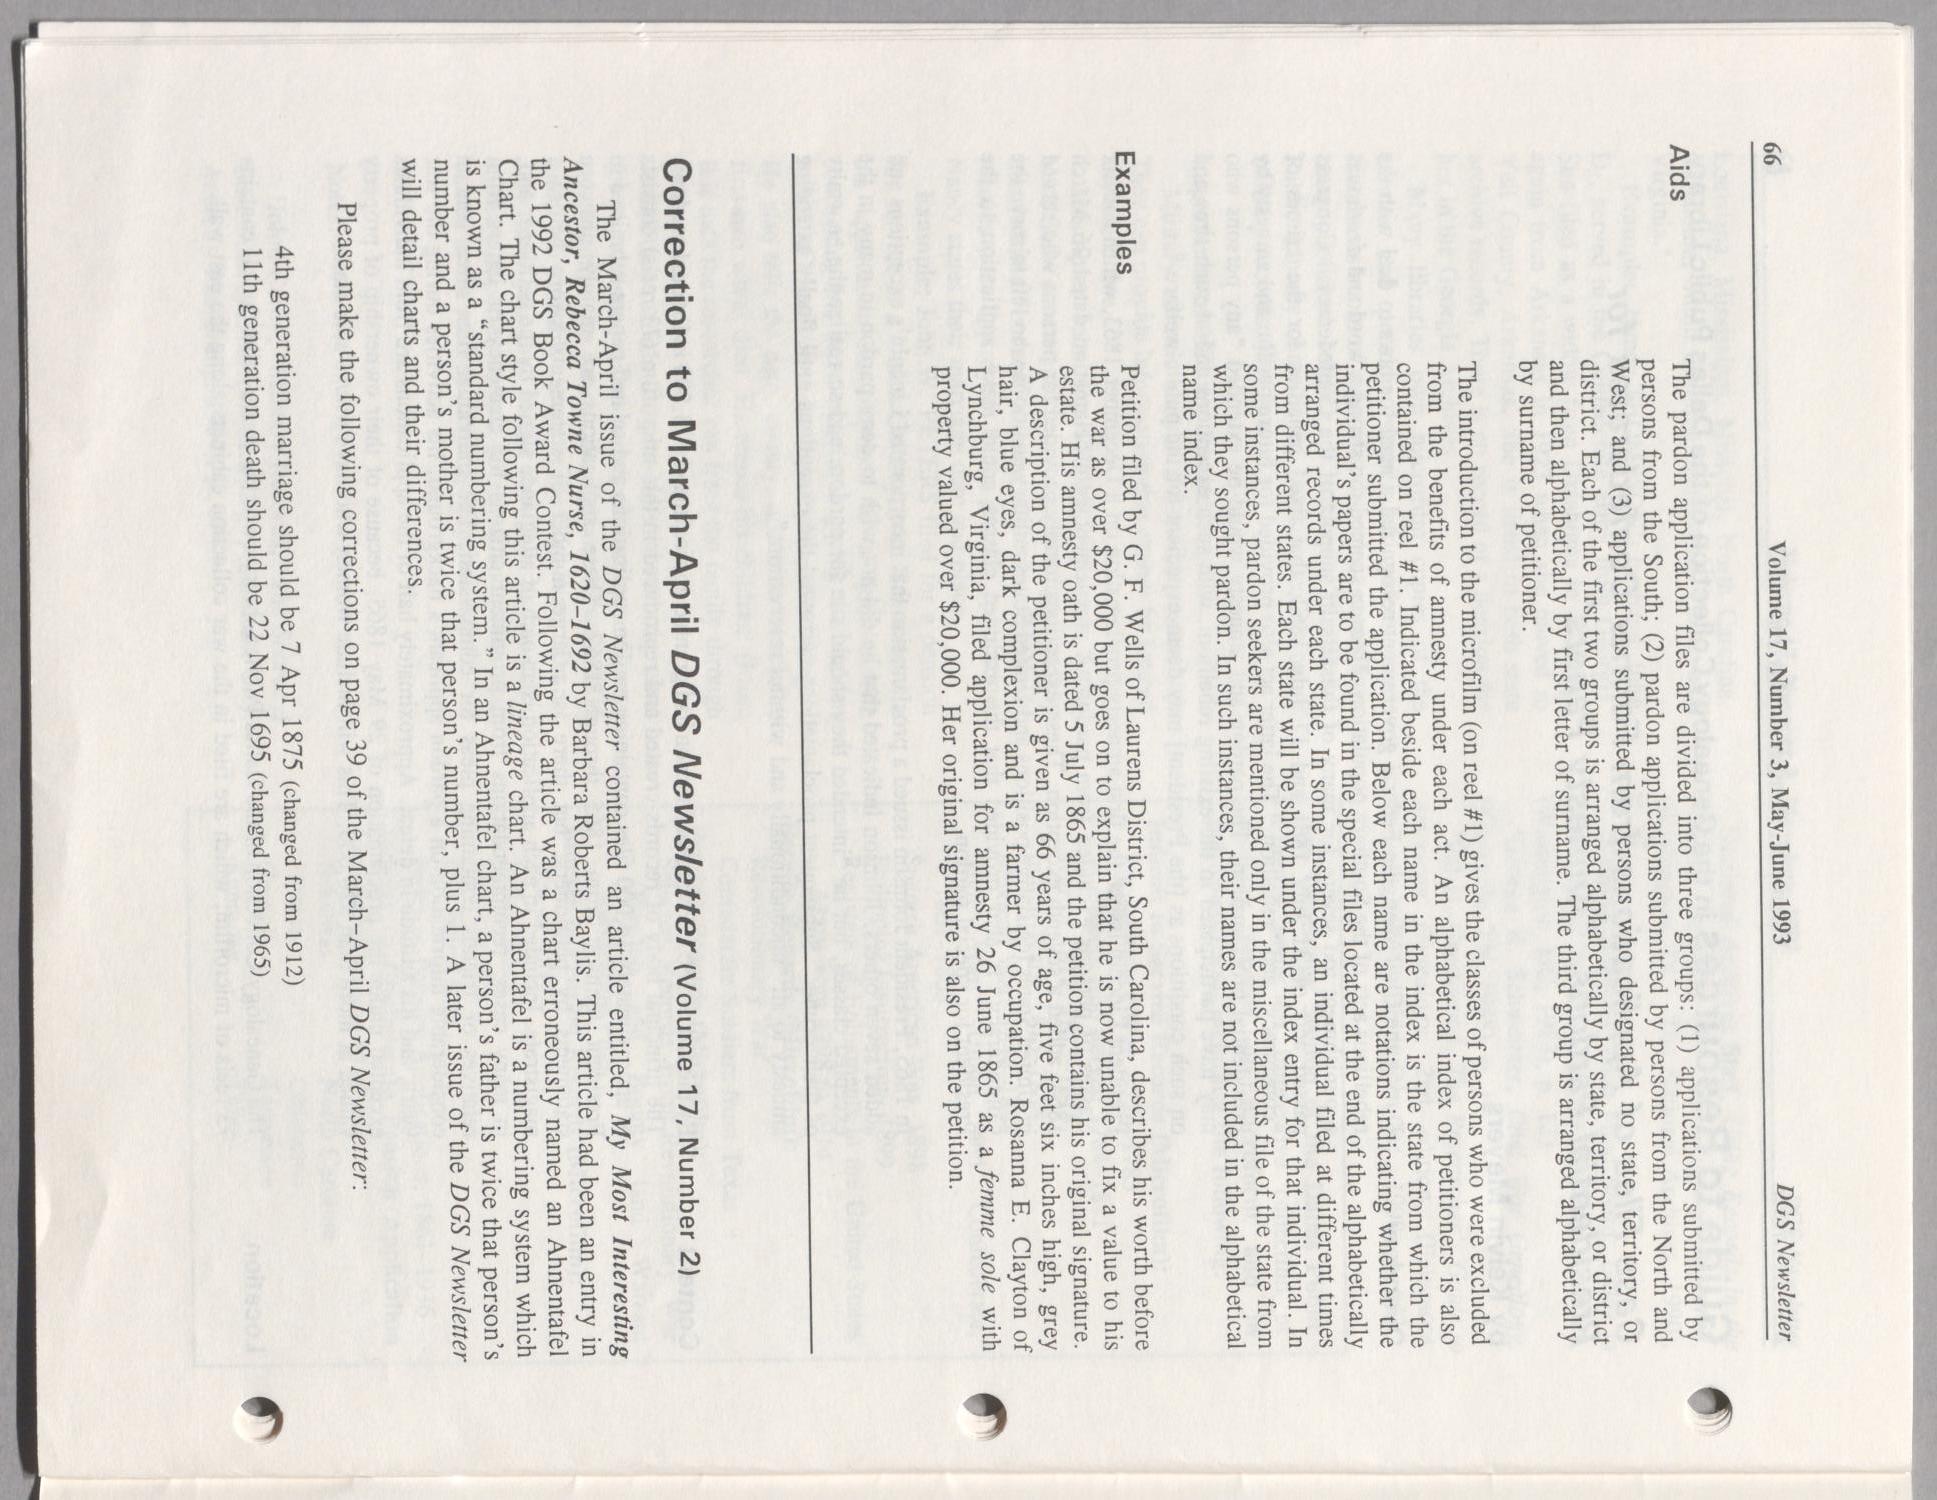 DGS Newsletter, Volume 17, Number 3, May-June 1993
                                                
                                                    66
                                                